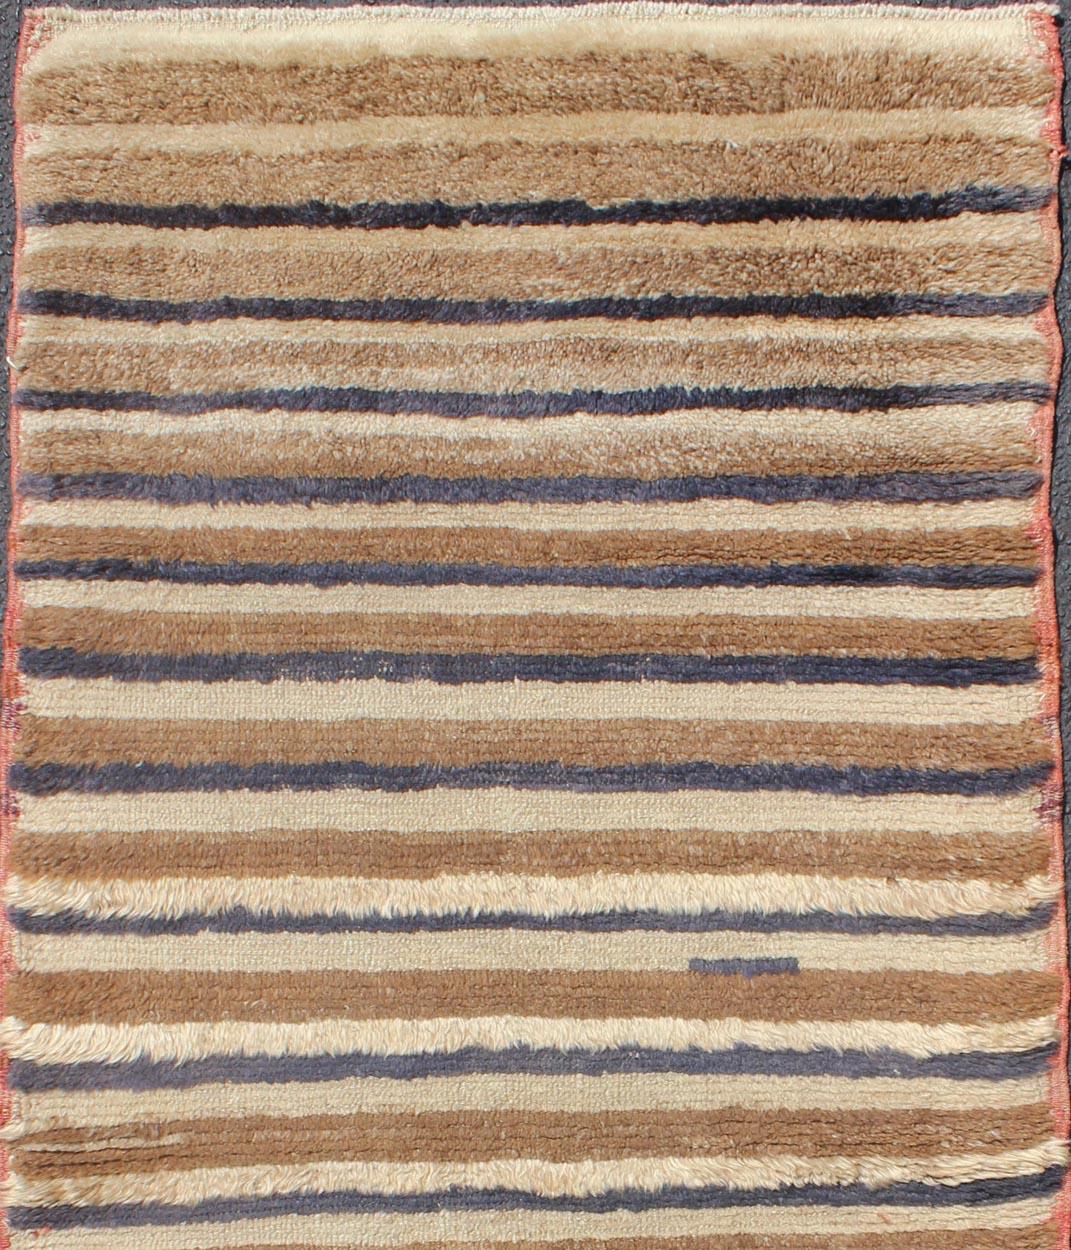 Vintage Turkish Tulu carpet with light brown, light beige/taupe and navy blue stripe pattern, rug EN-140393. Keivan Woven Arts /  country of origin / type: Turkey / Tulu, circa mid-20th century.

Measures: 2'7 x 5'10.